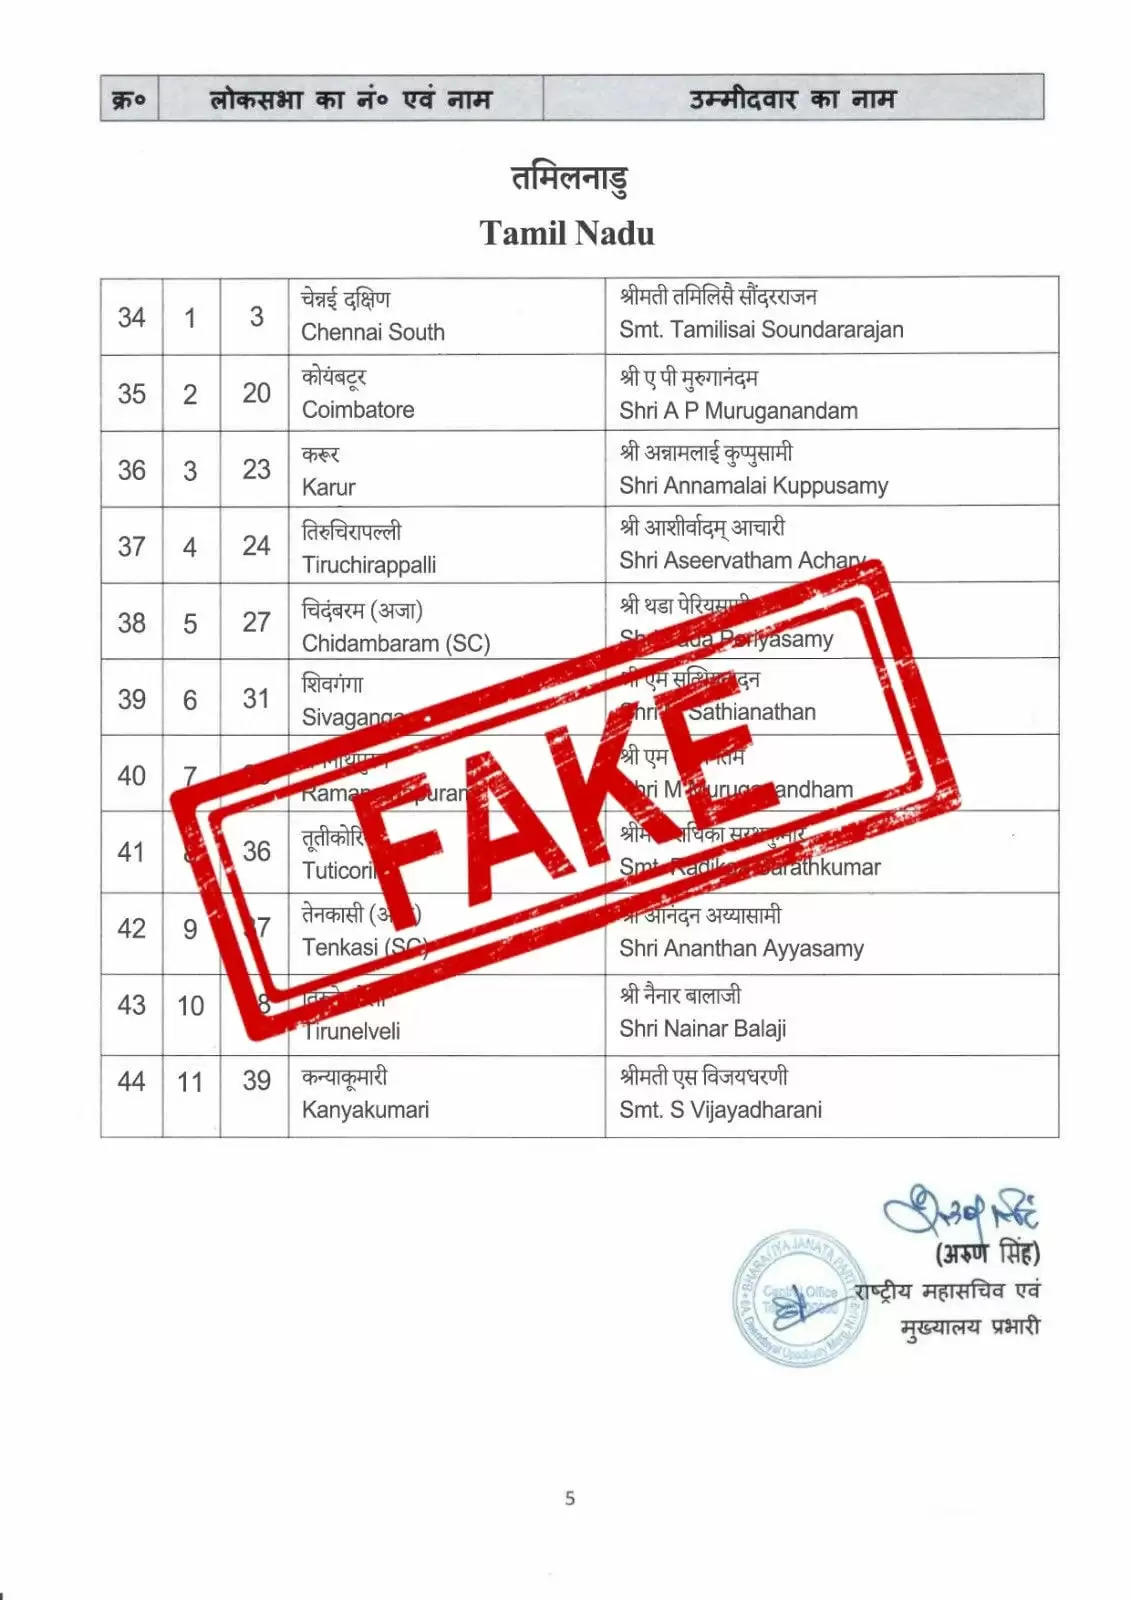 Bjp candidate fake list